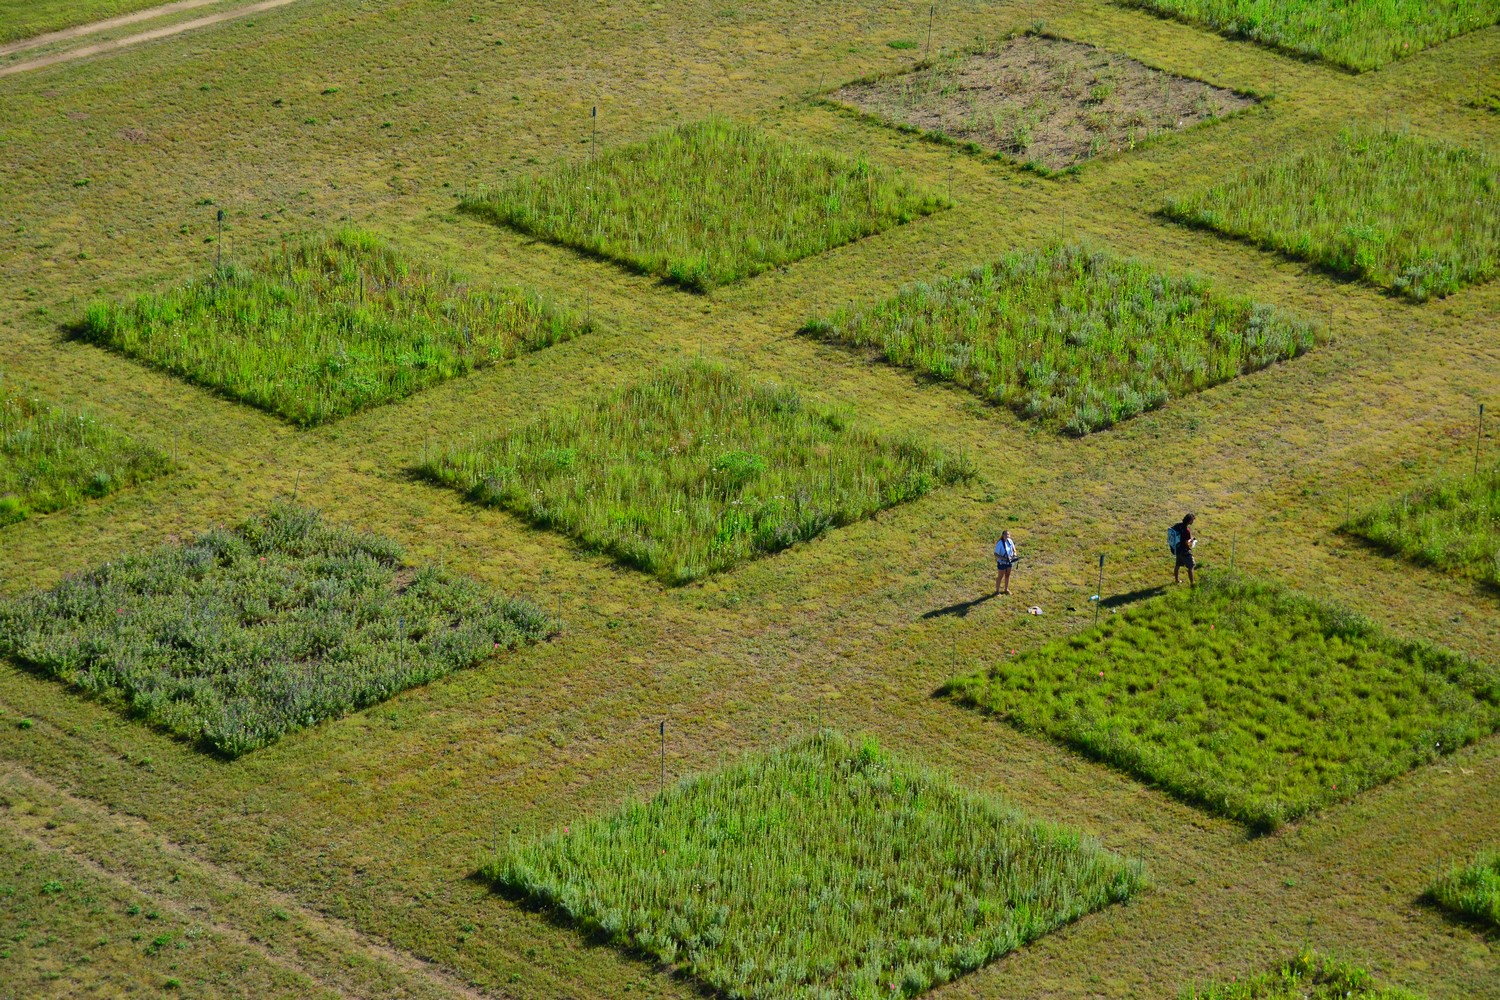 Grassland plot experiments at Cedar Creek LTER in Minnesota.